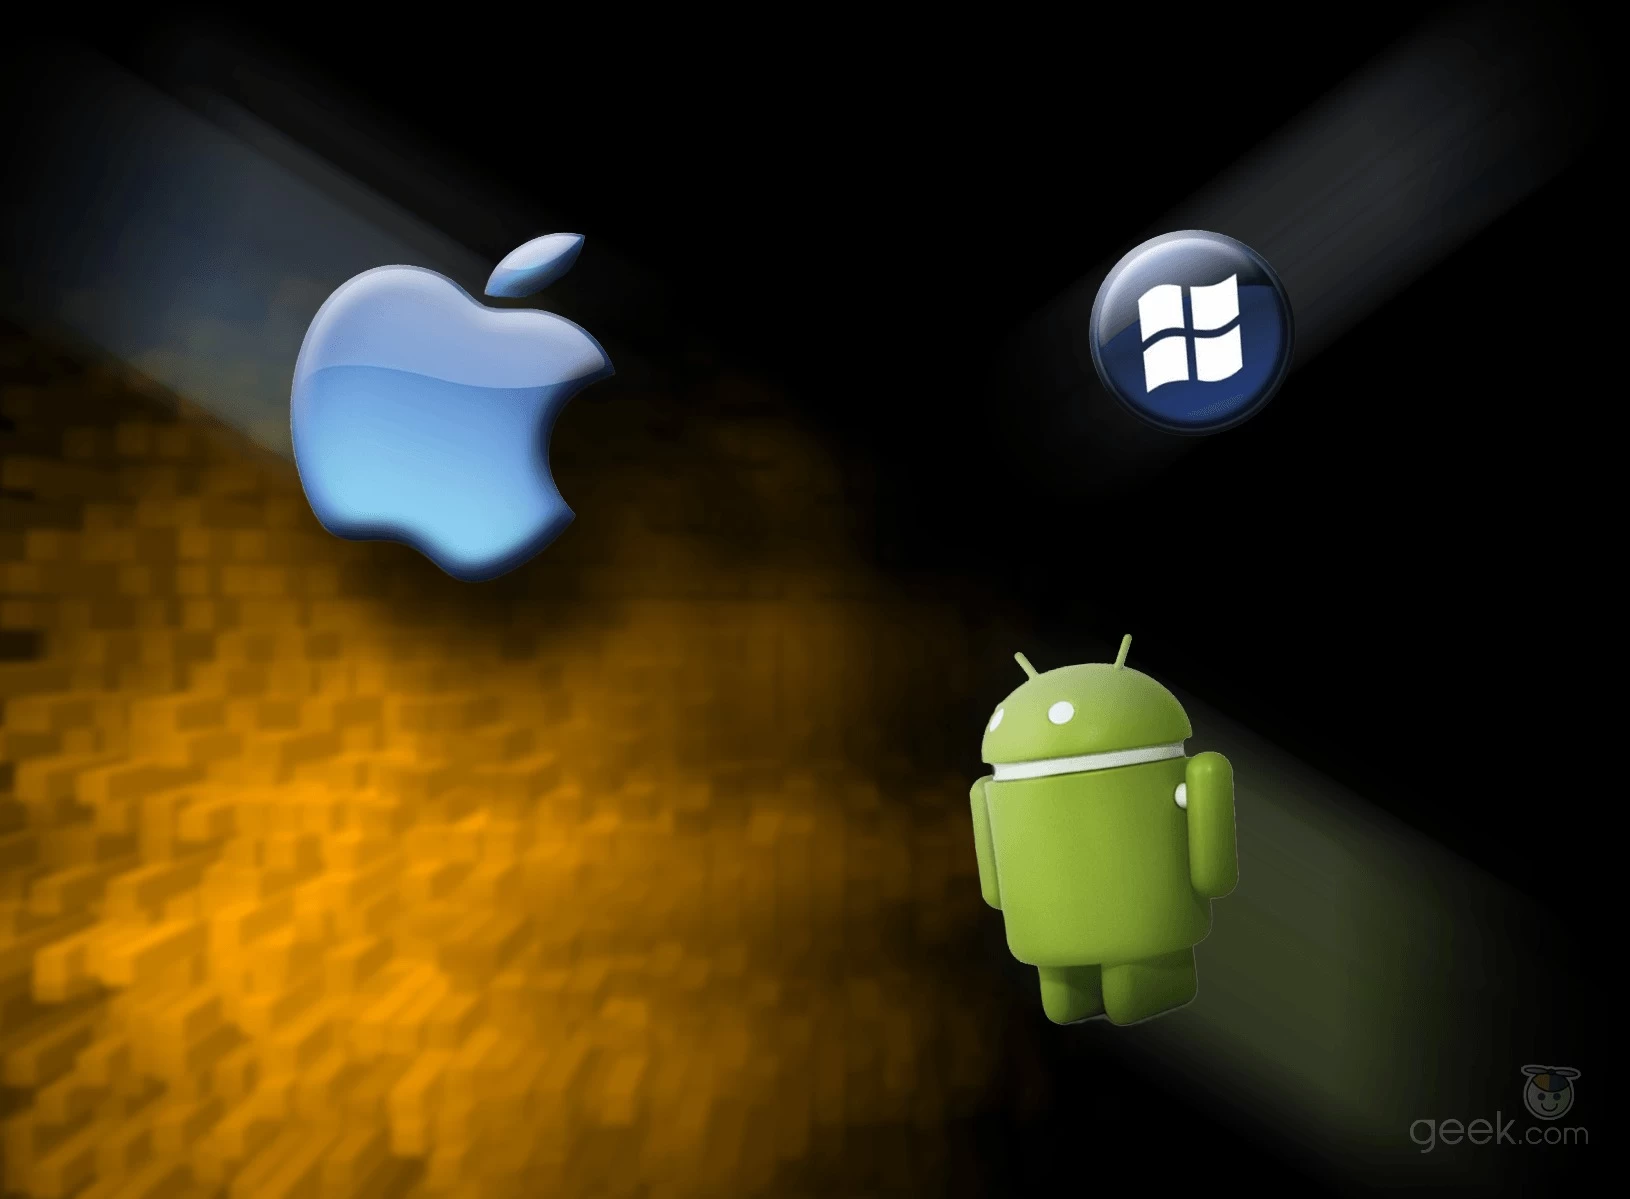 android vs ios vs windows phone 1 | IOS (iPhone/iPad) | ส่วนแบ่งการตลาดของฝั่ง Android เพิ่มมากกว่า IOS ตอนปีที่แล้วซะอีก